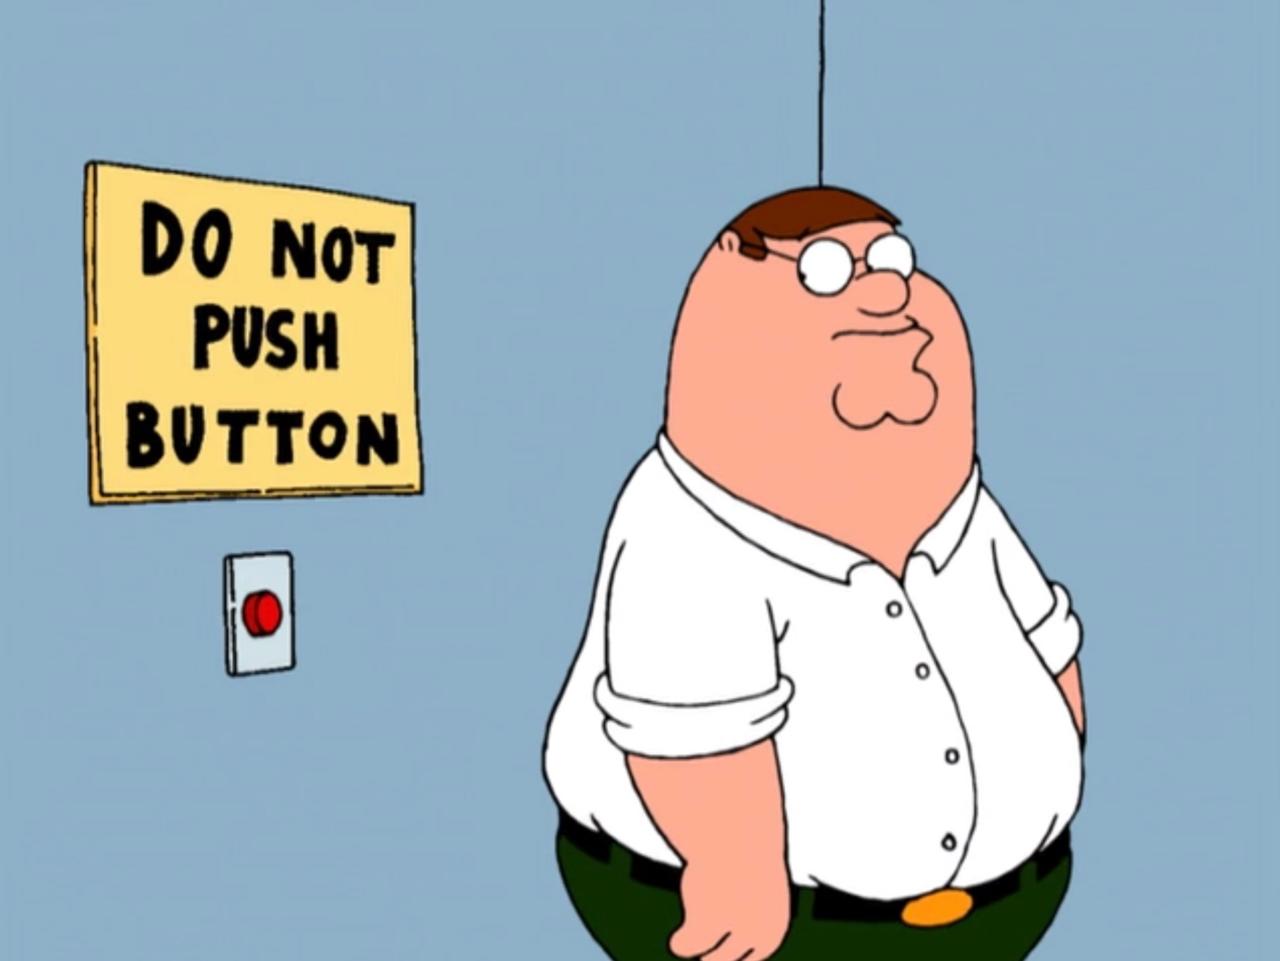 2. Do Not Push Button